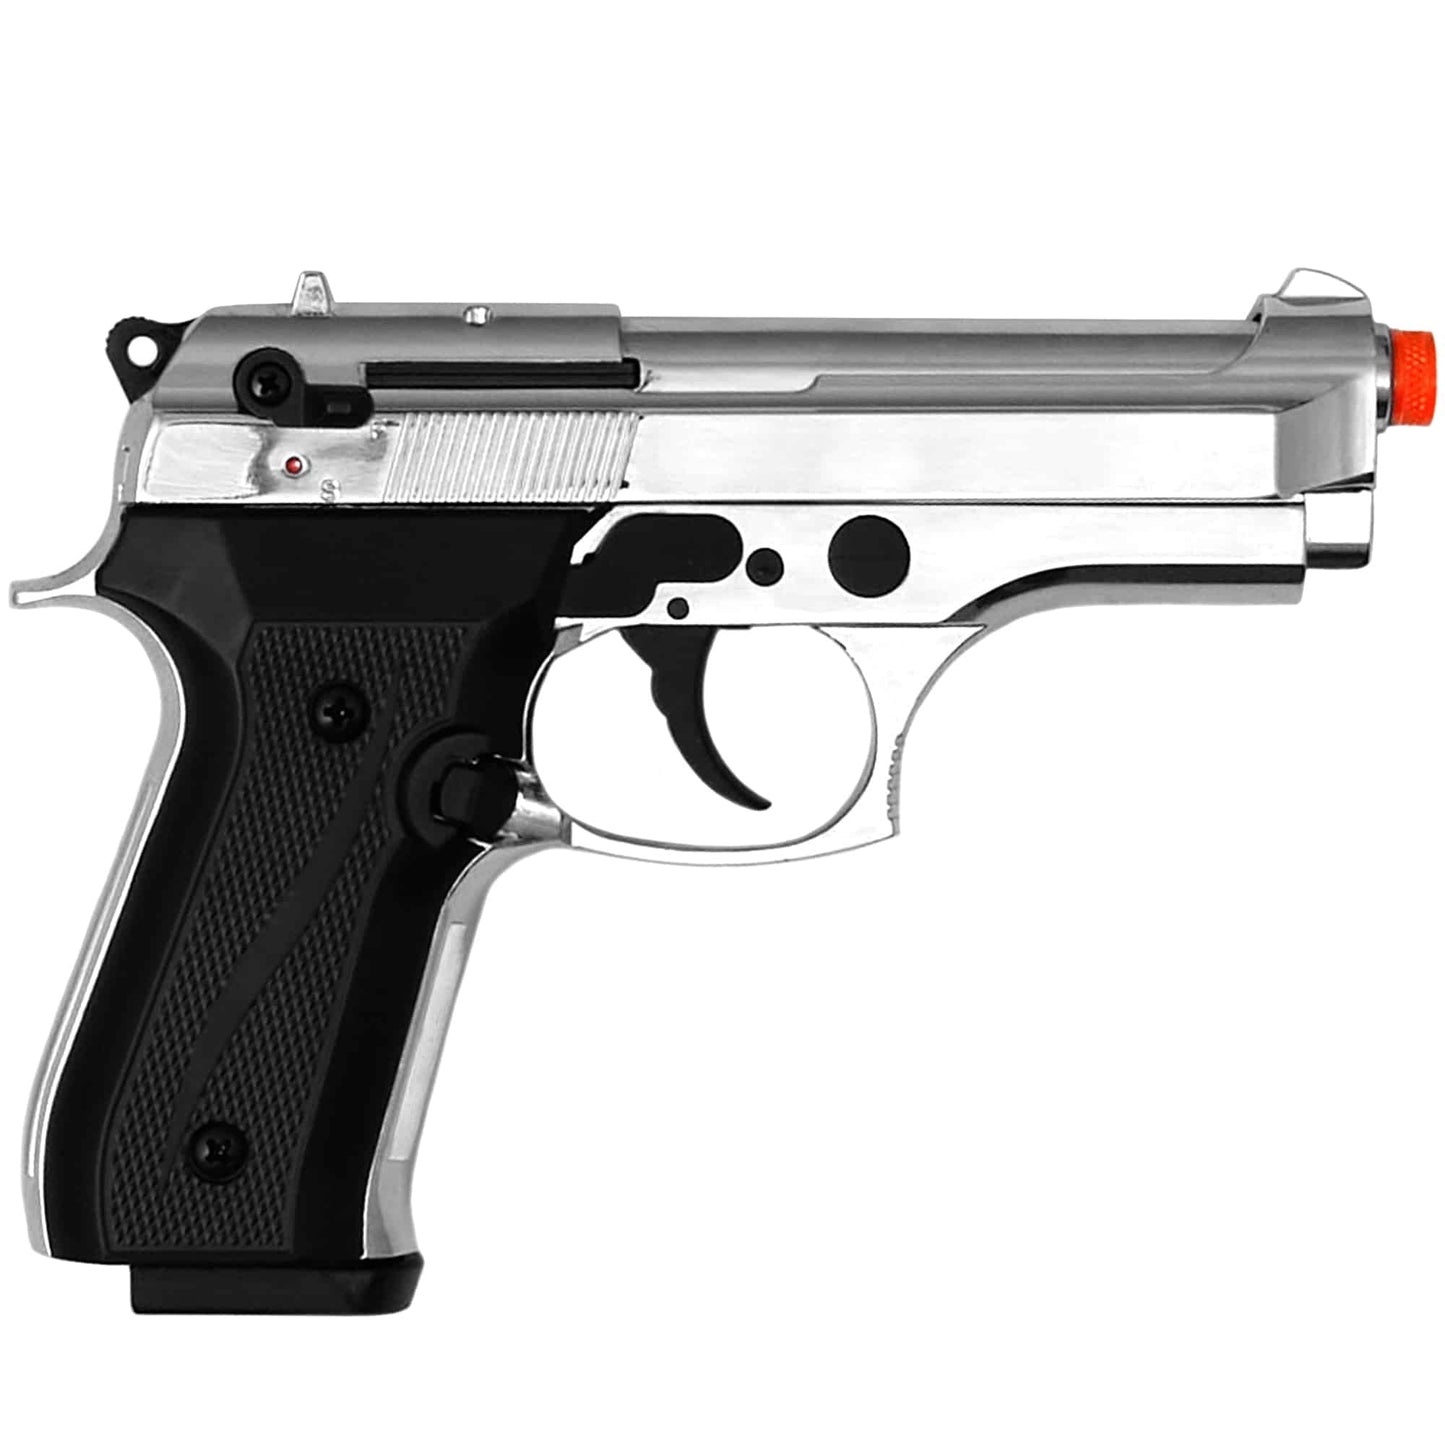 Jackal Dual Compact 9mm Pistol Chrome Finish - Blank Firing